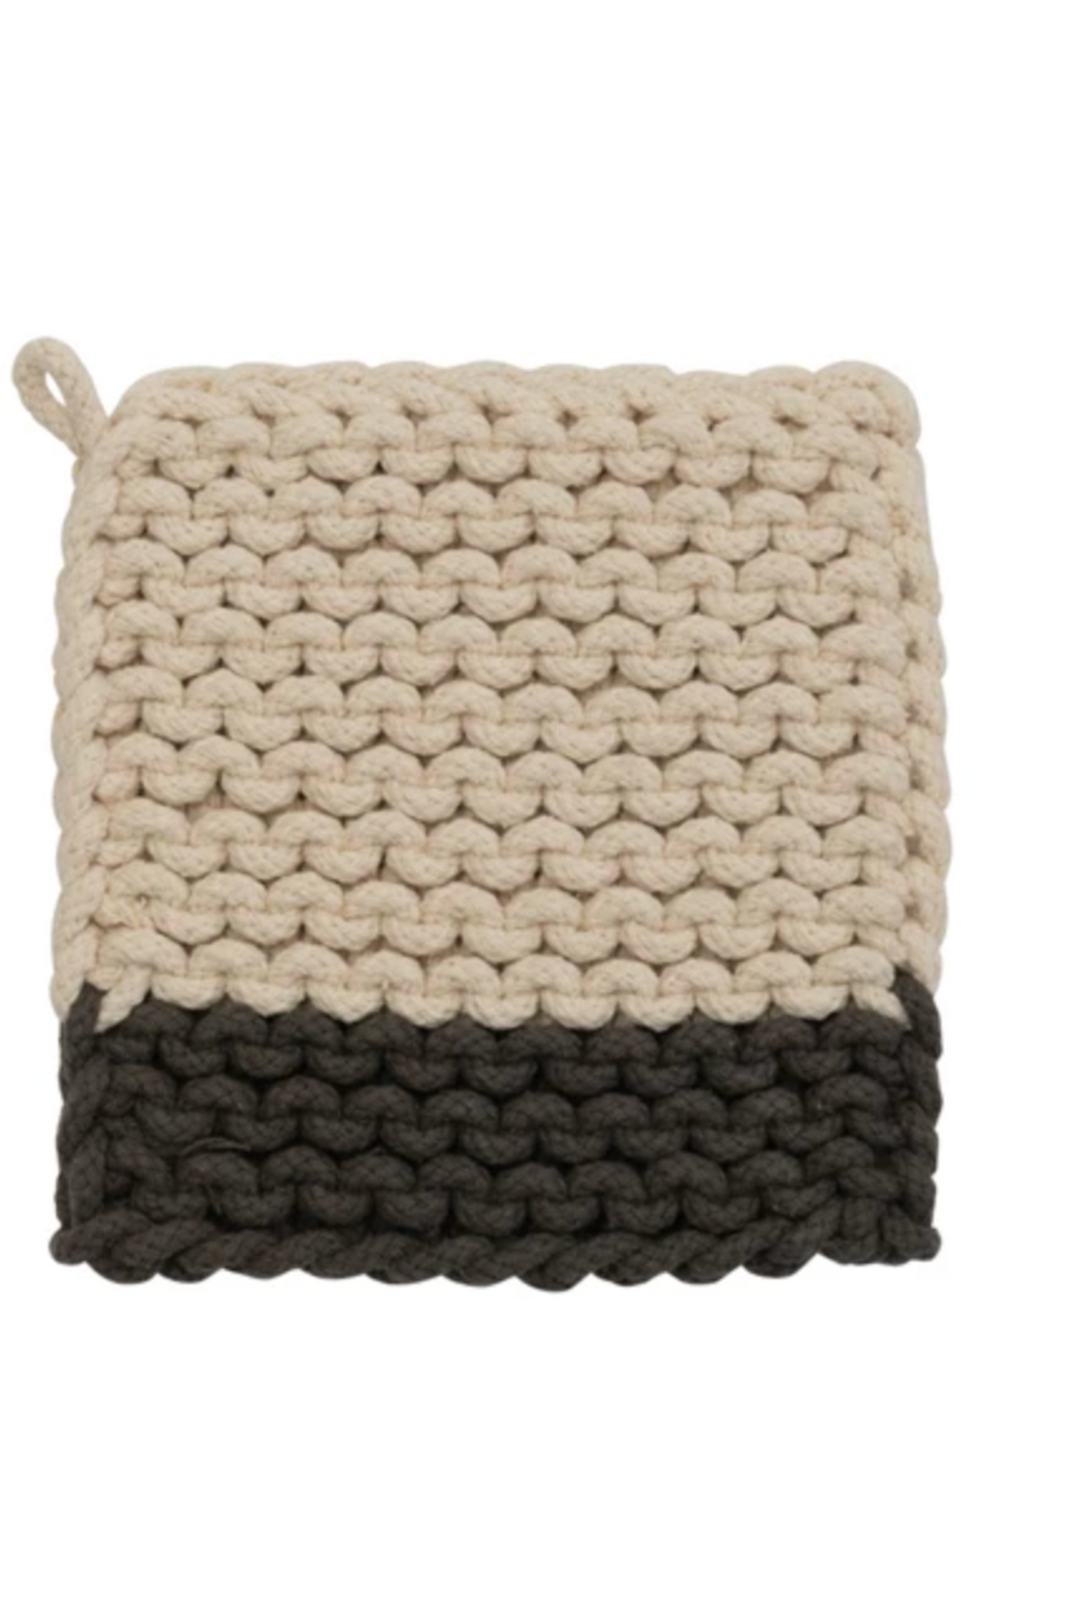 Culinary Craze Crochet Pot Holder in Gray/Cream